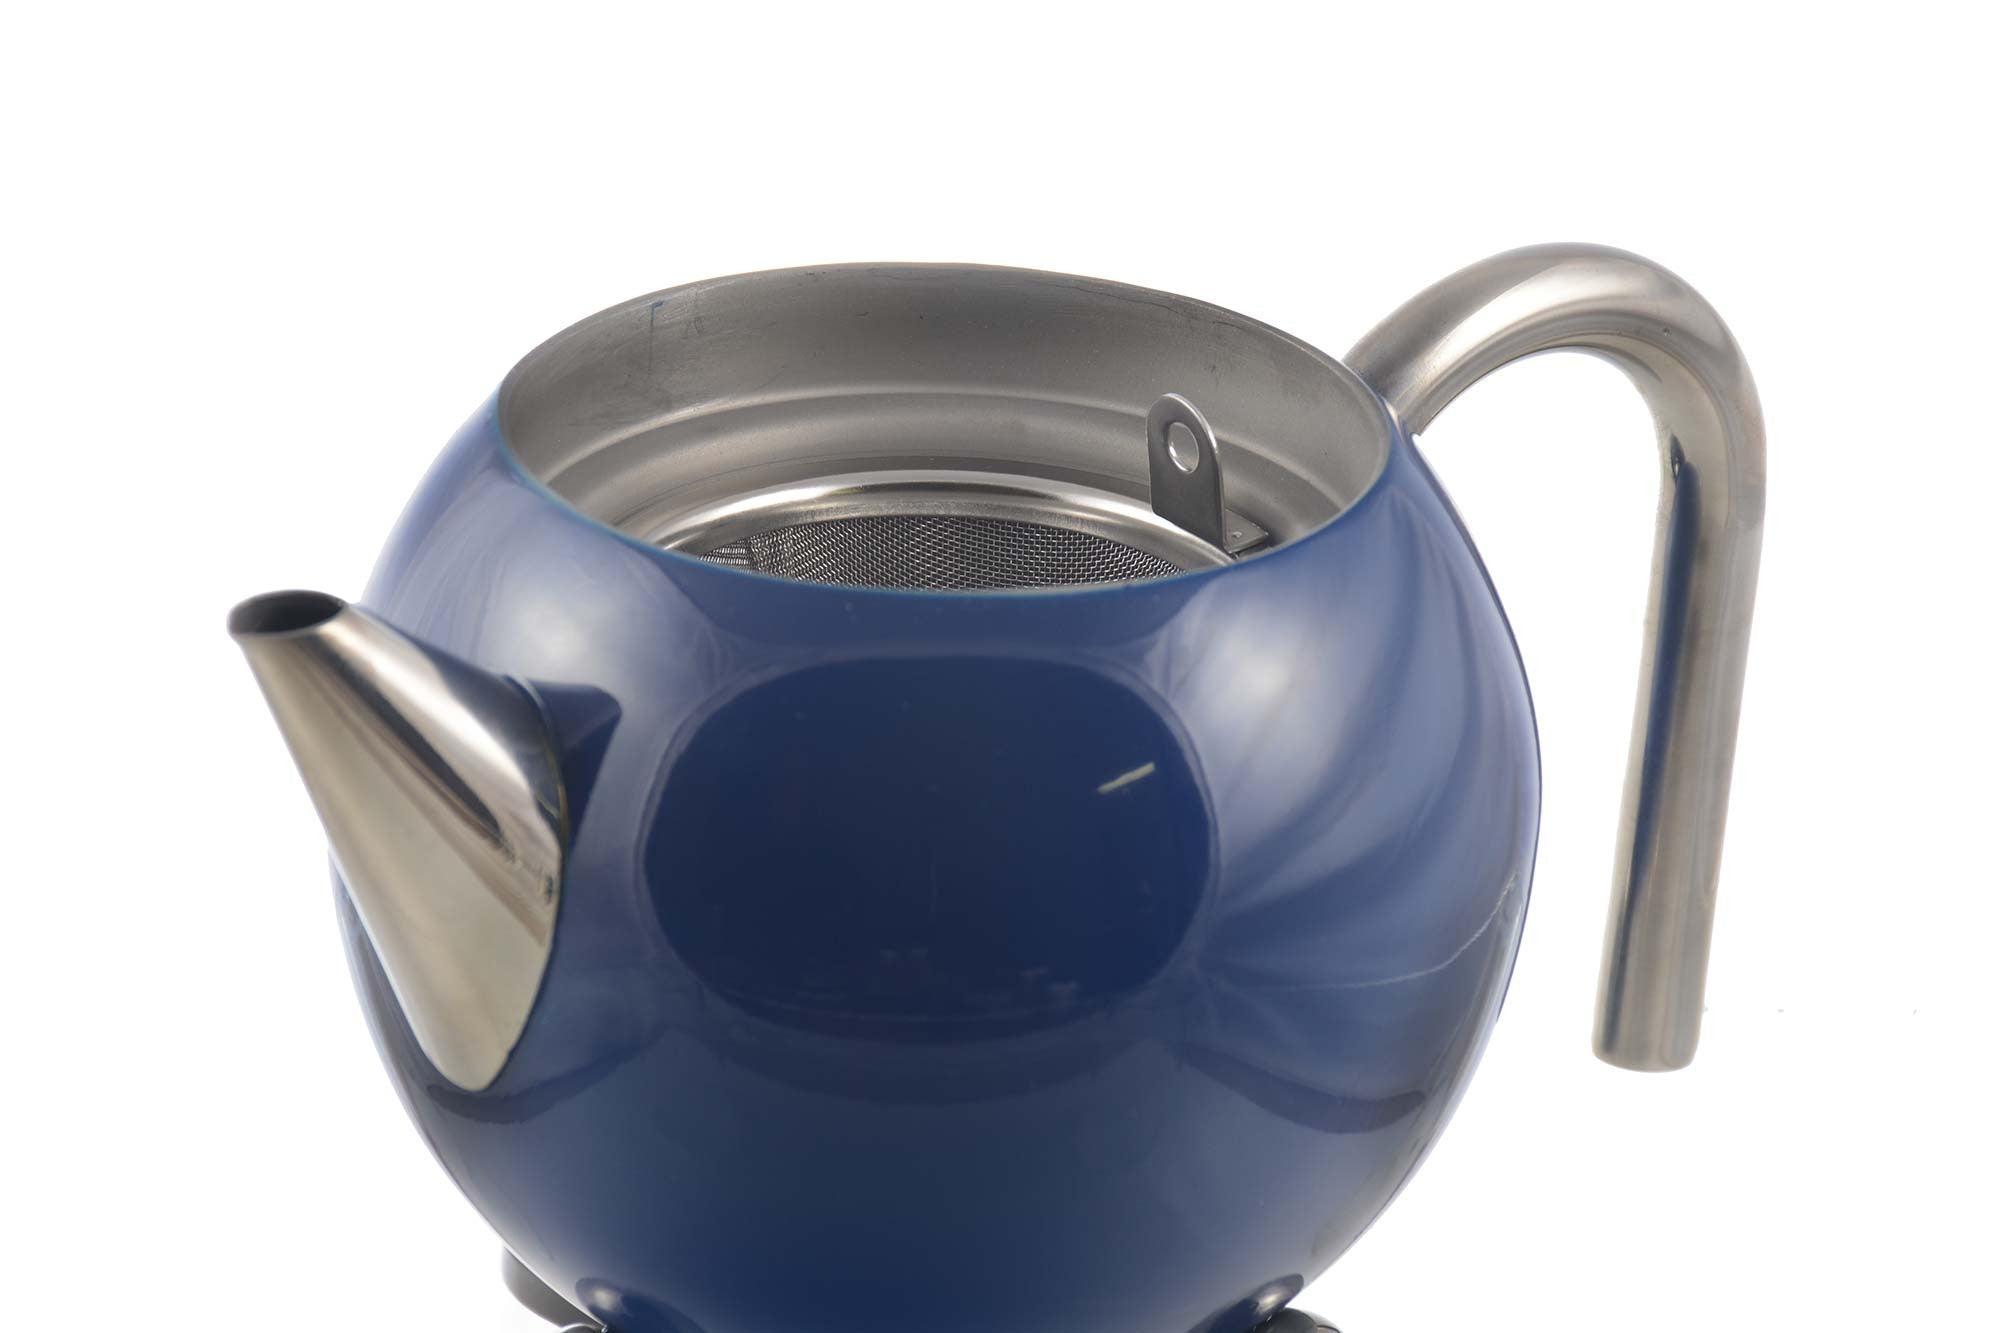 Infuser Teapot: Painted Ladies Teapot - Pink, 775ml/27 fl. oz